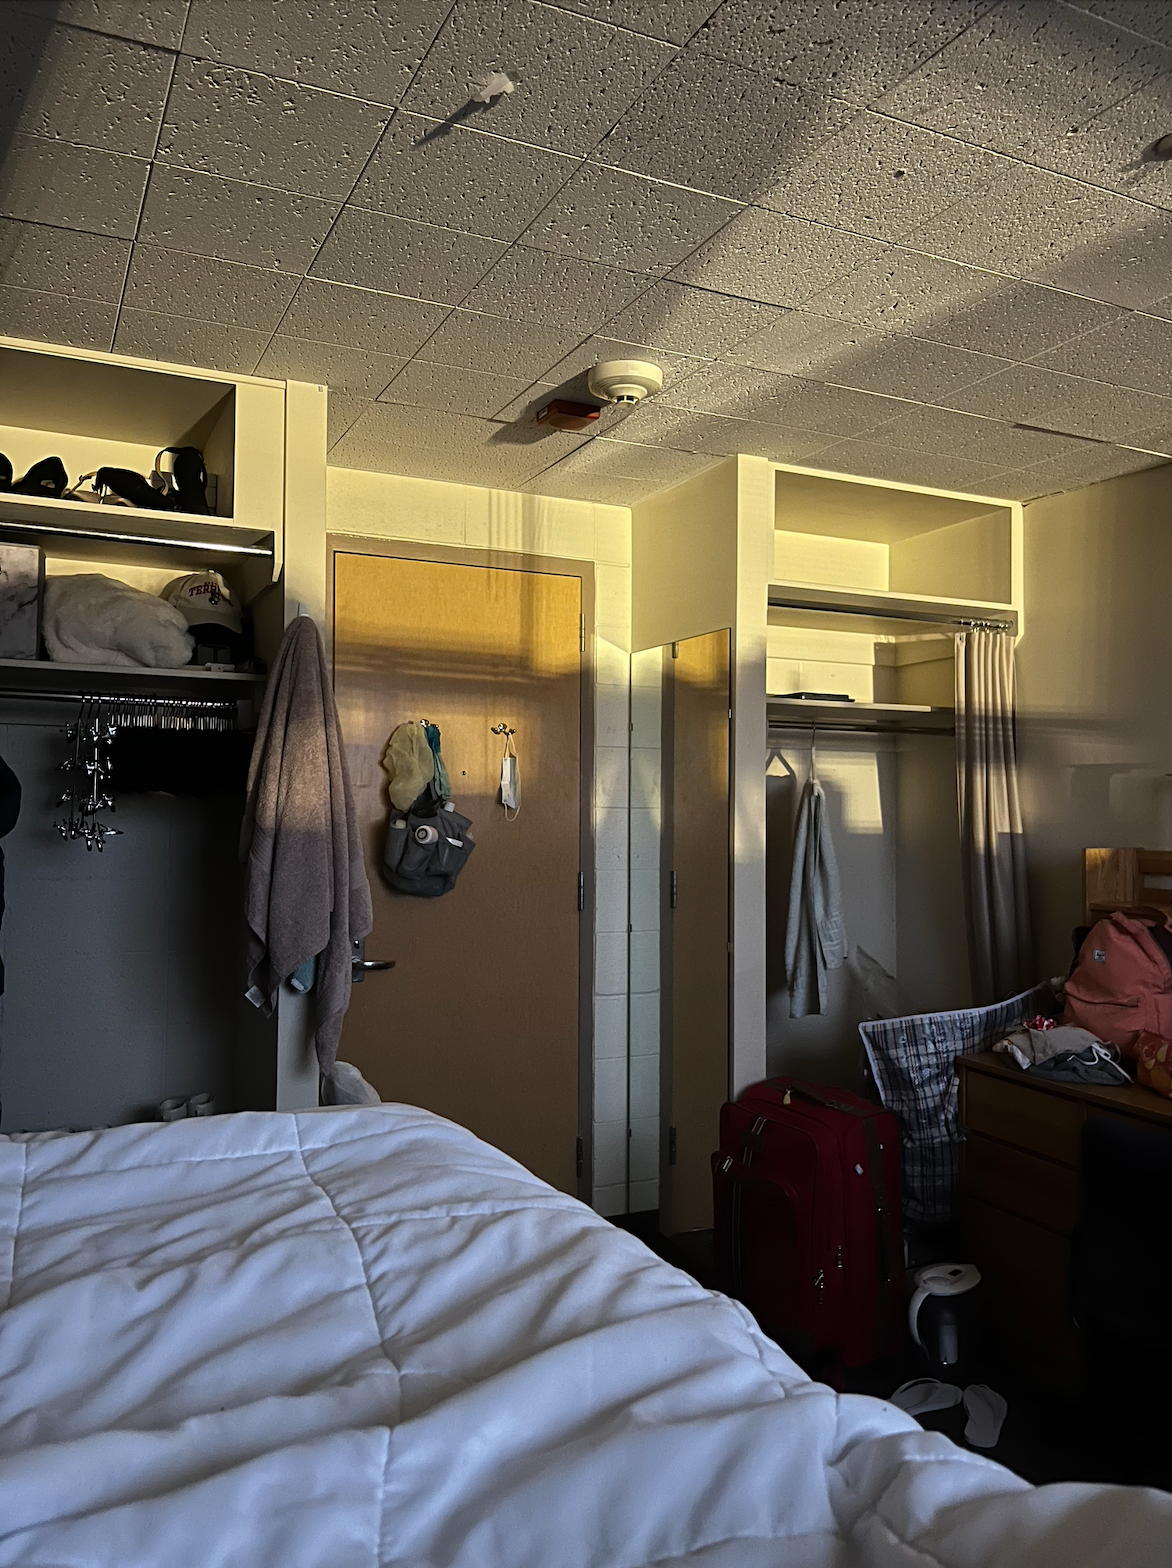 West Campus dorm room